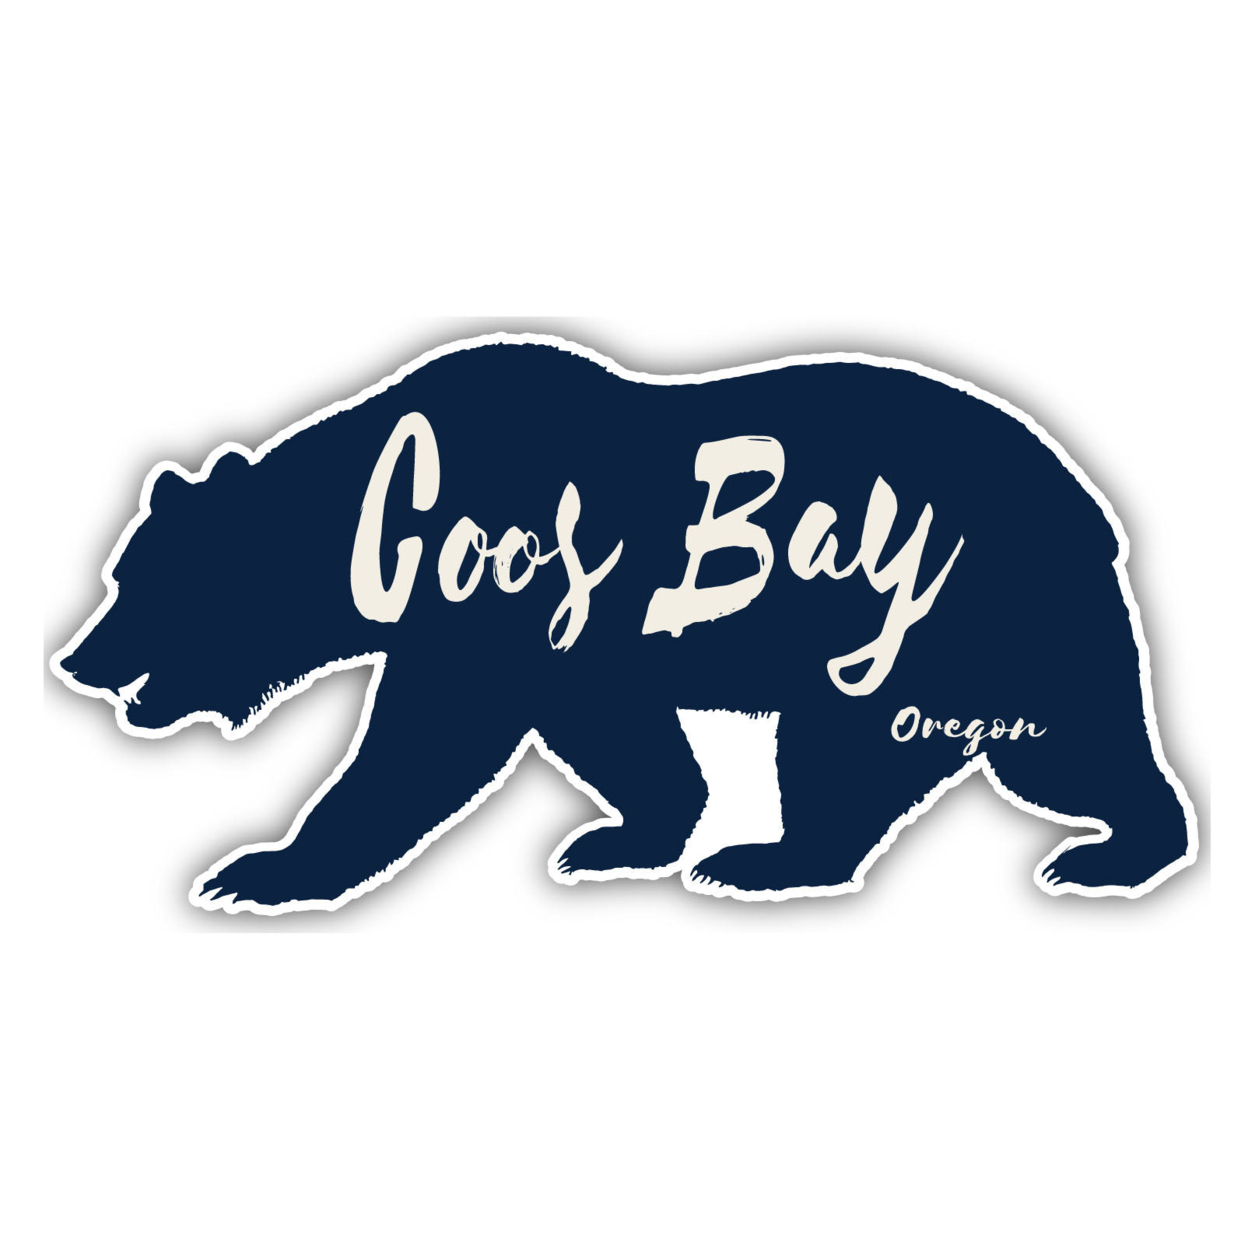 Coos Bay Oregon Souvenir Decorative Stickers (Choose Theme And Size) - Single Unit, 12-Inch, Bear